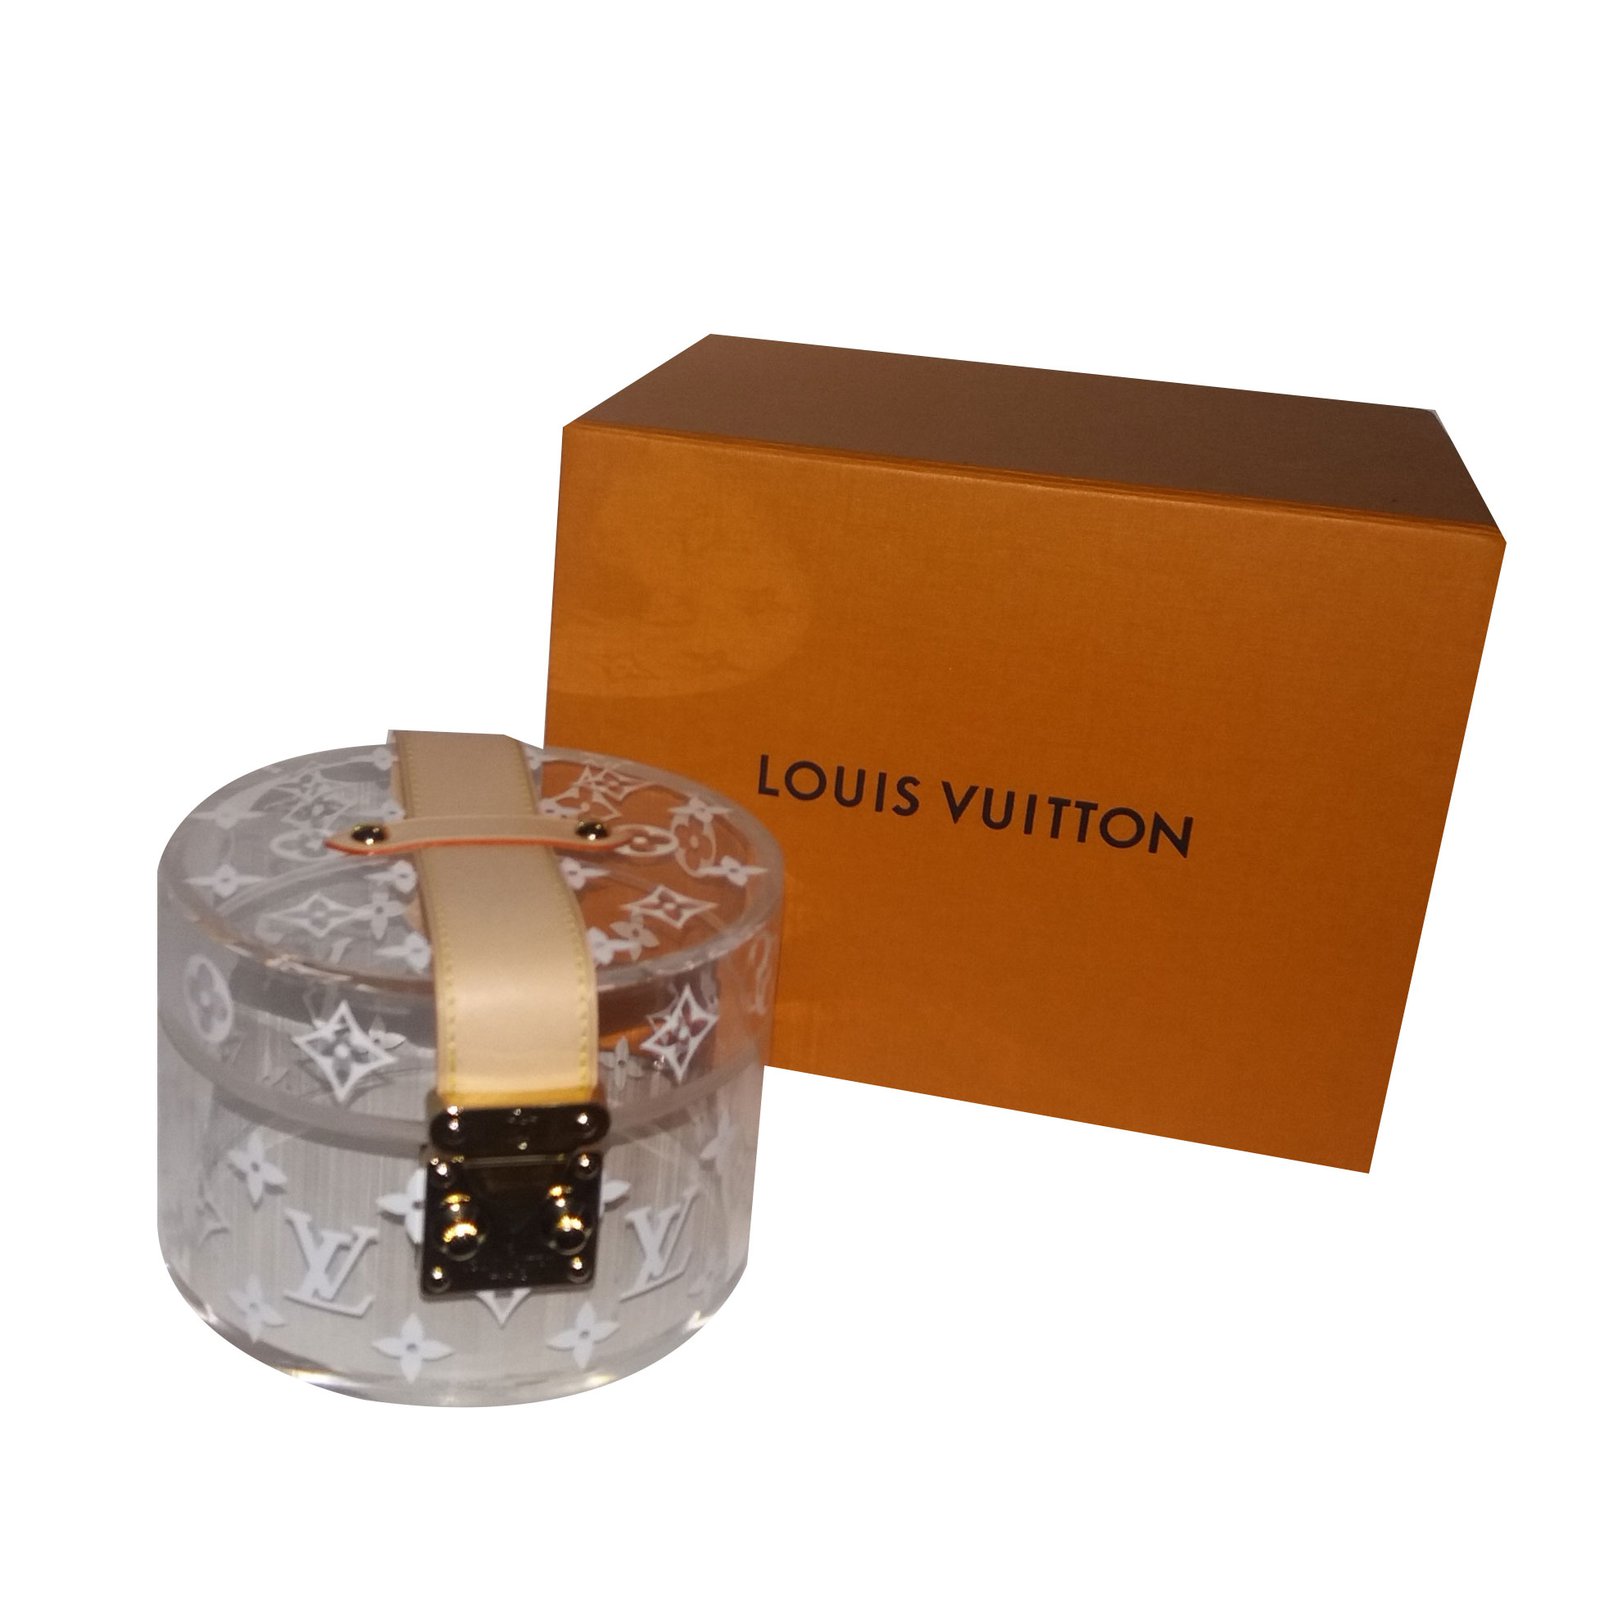 Louis Vuitton Scott Box BRAND NEW